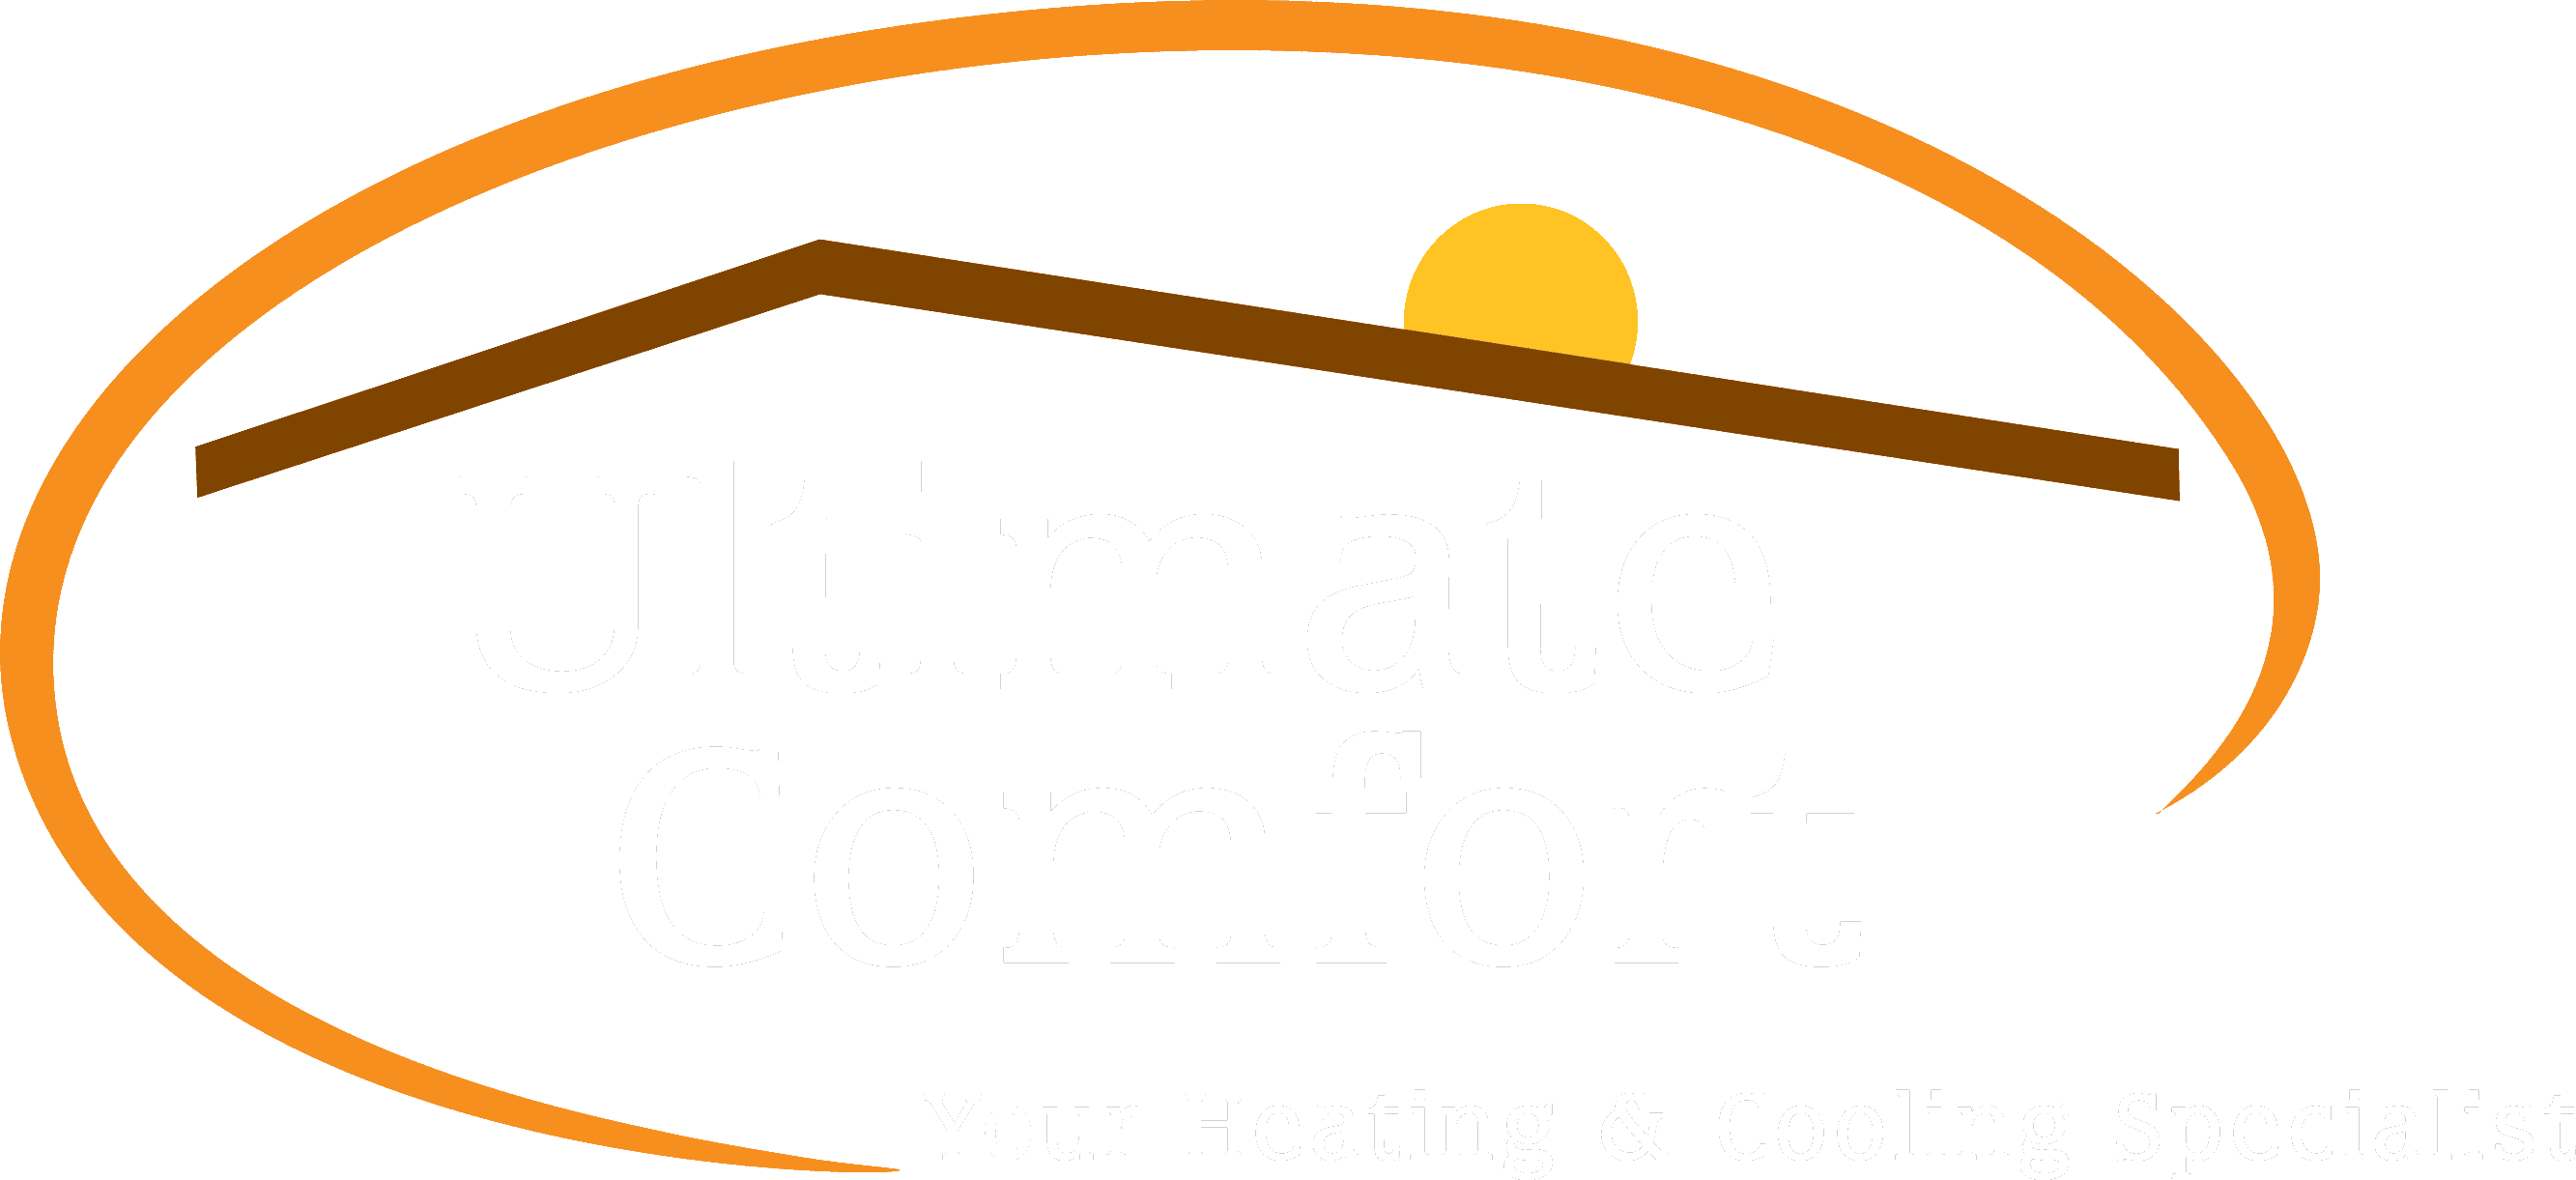 Ultimate Comfort logo transparent (white)